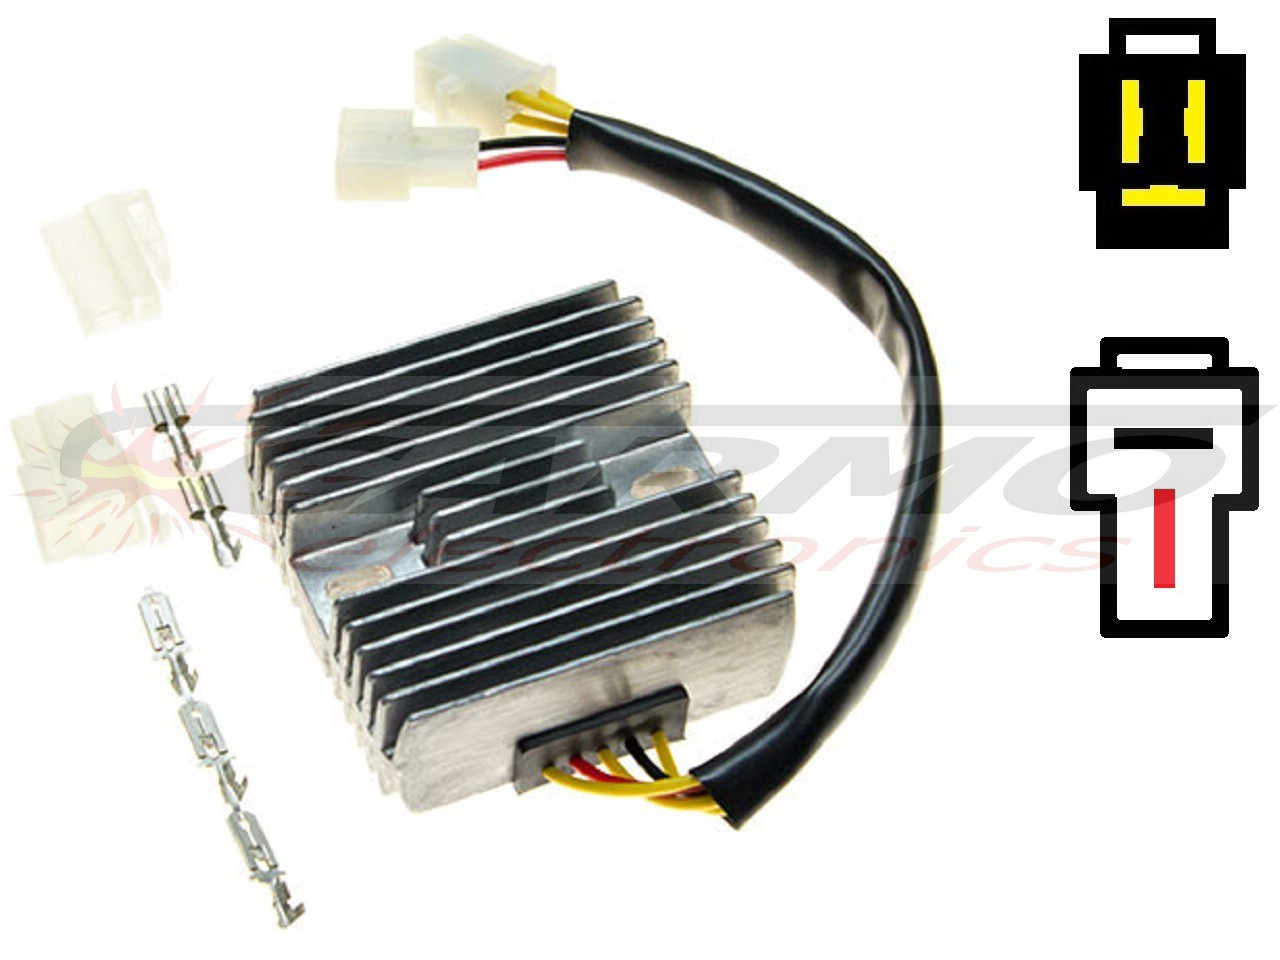 CARR171 - Suzuki Husaberg MOSFET Voltage regulator rectifier (SH640HA) - Clique na Imagem para Fechar